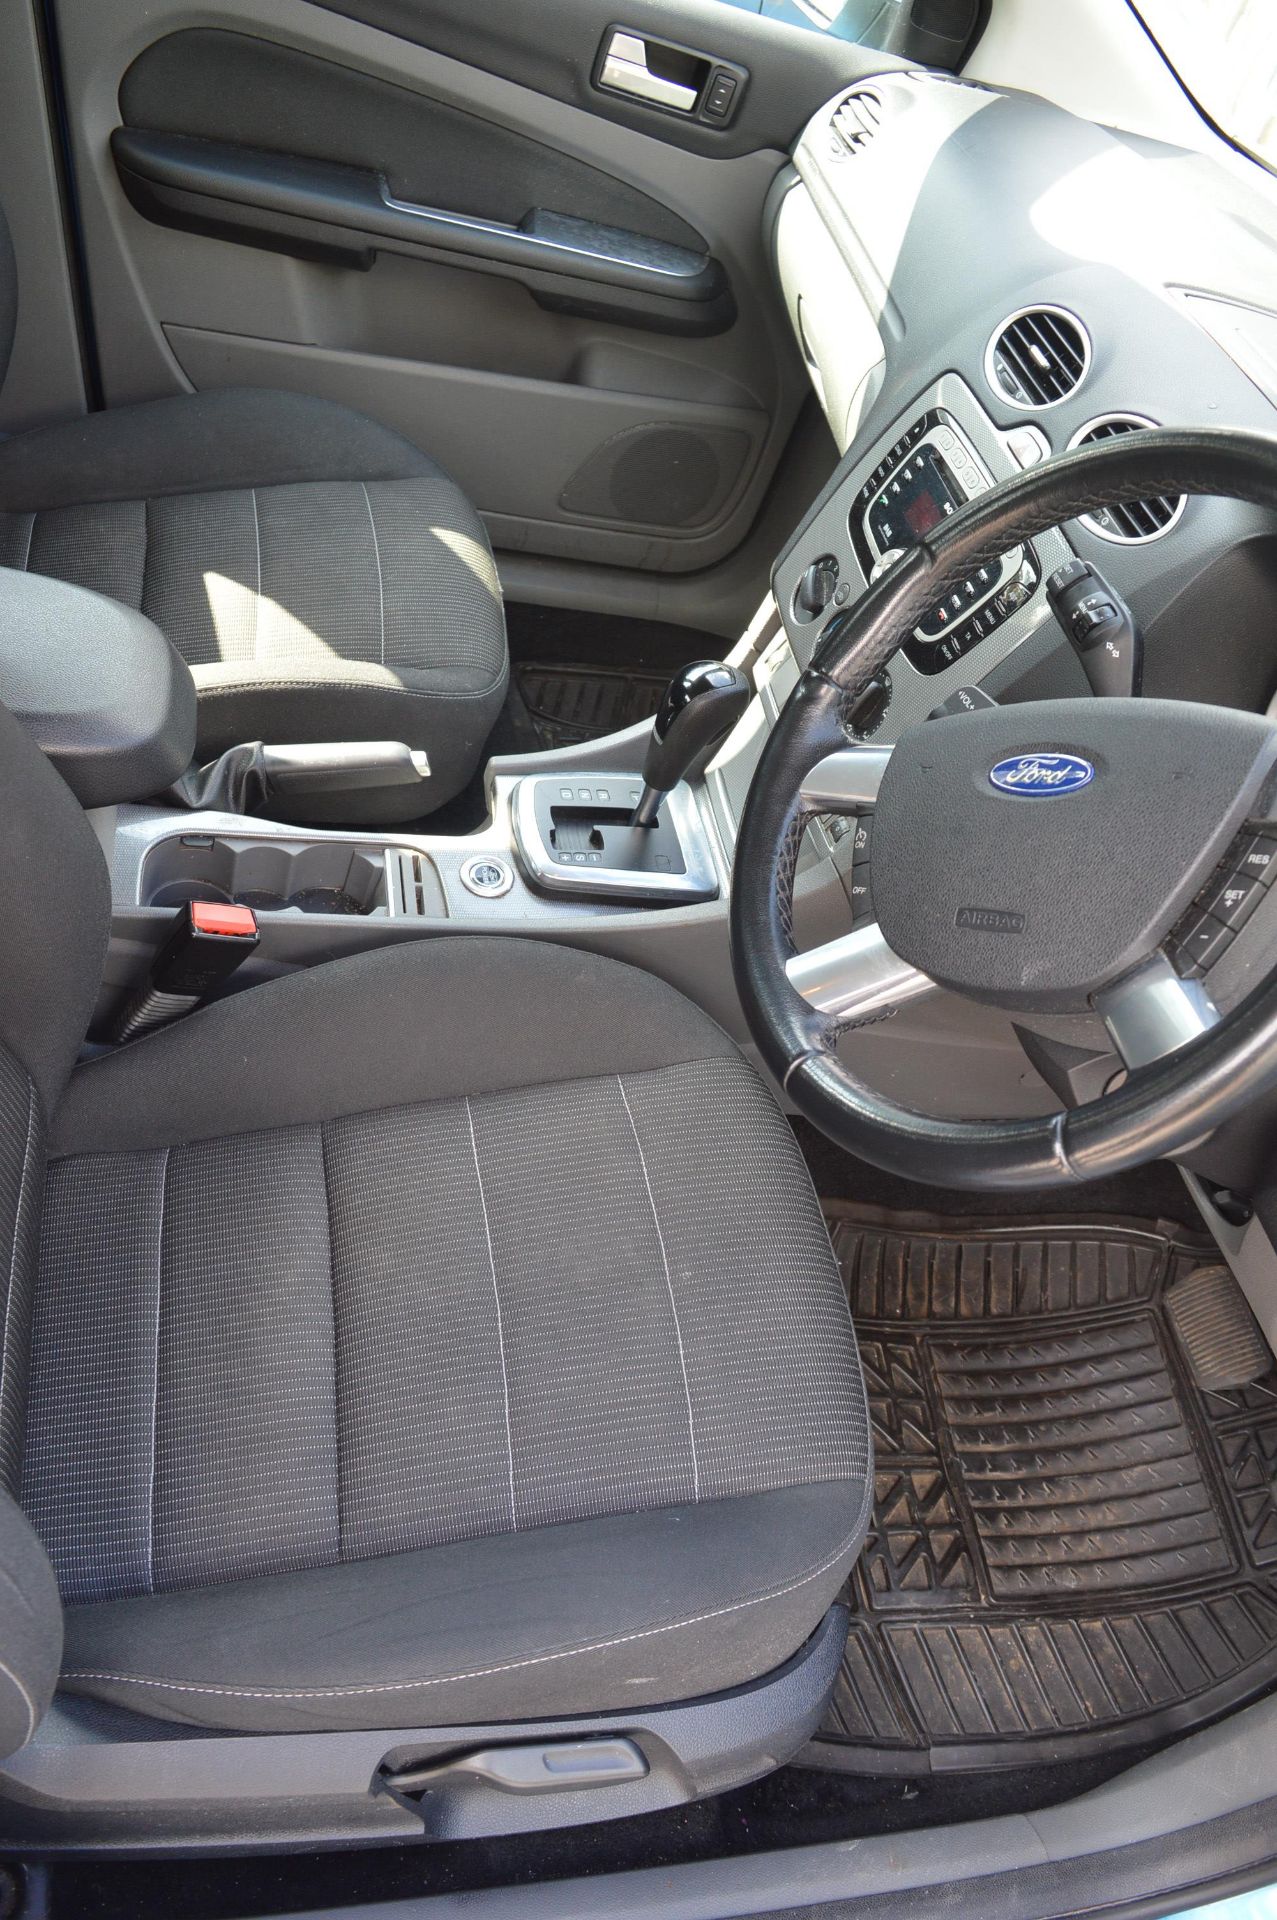 Ford Focus Titanium 1.6 Automatic Reg:LT10 LTZ, MOT: March 2020 - Full Service History - Image 3 of 4